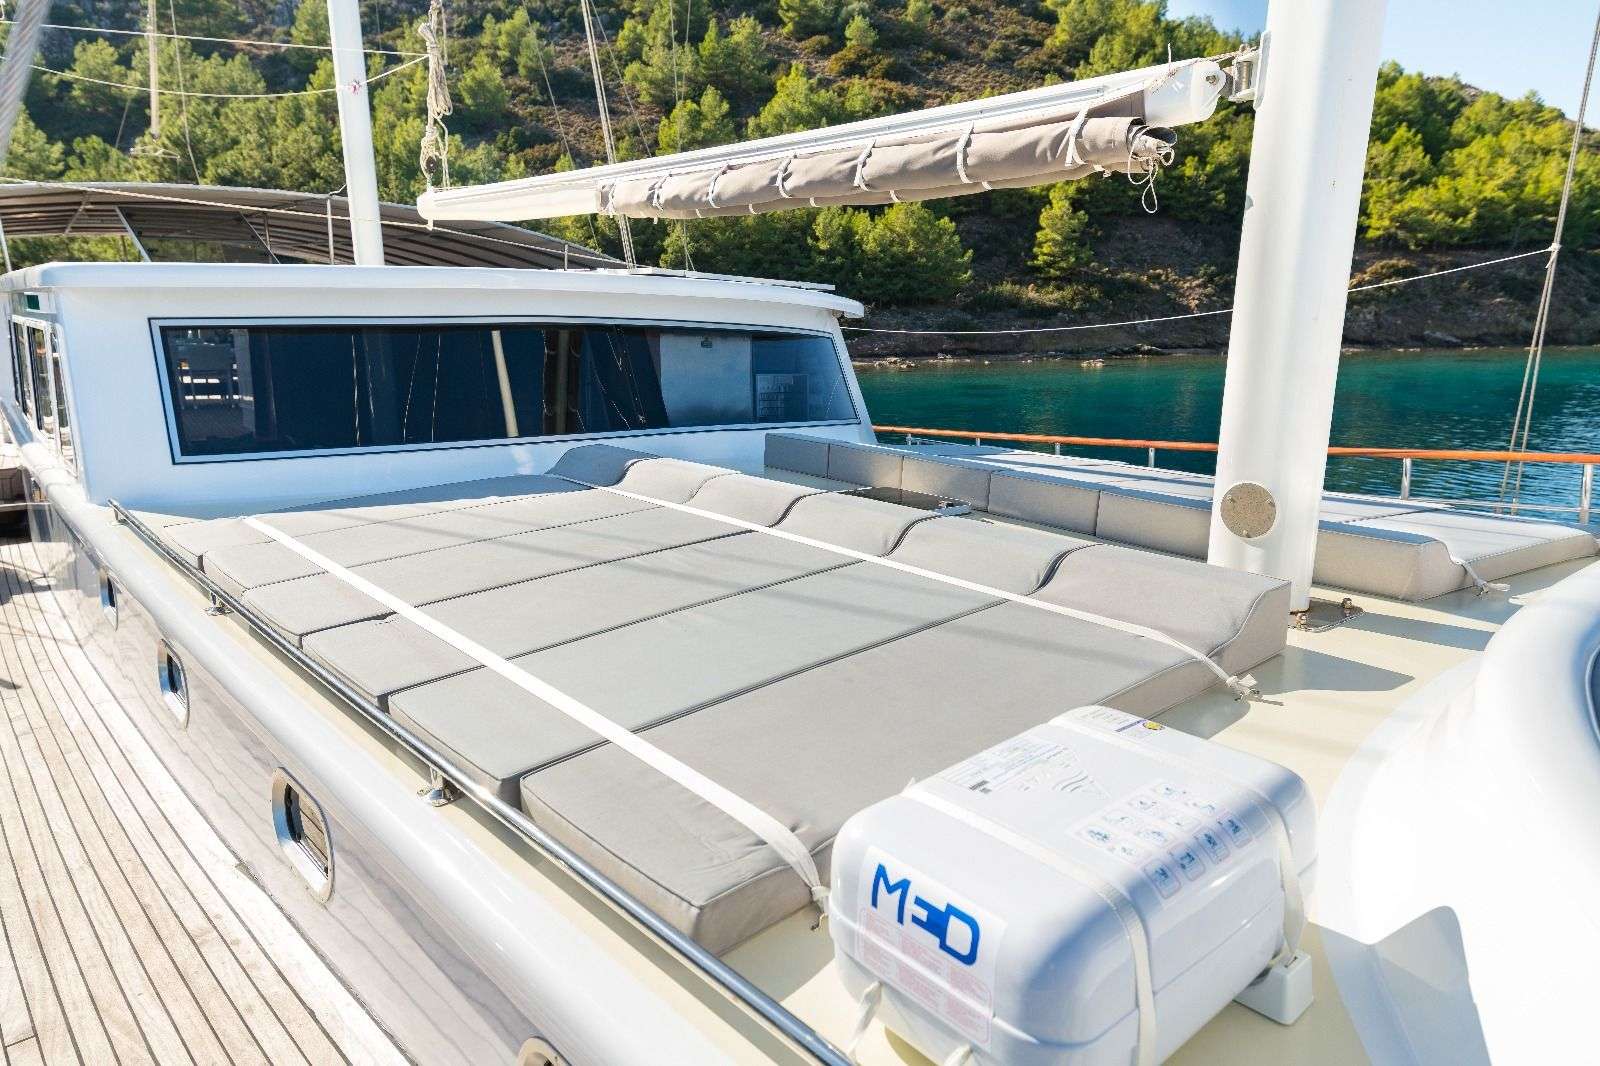 koray ege - Yacht Charter Naxos & Boat hire in Greece & Turkey 3